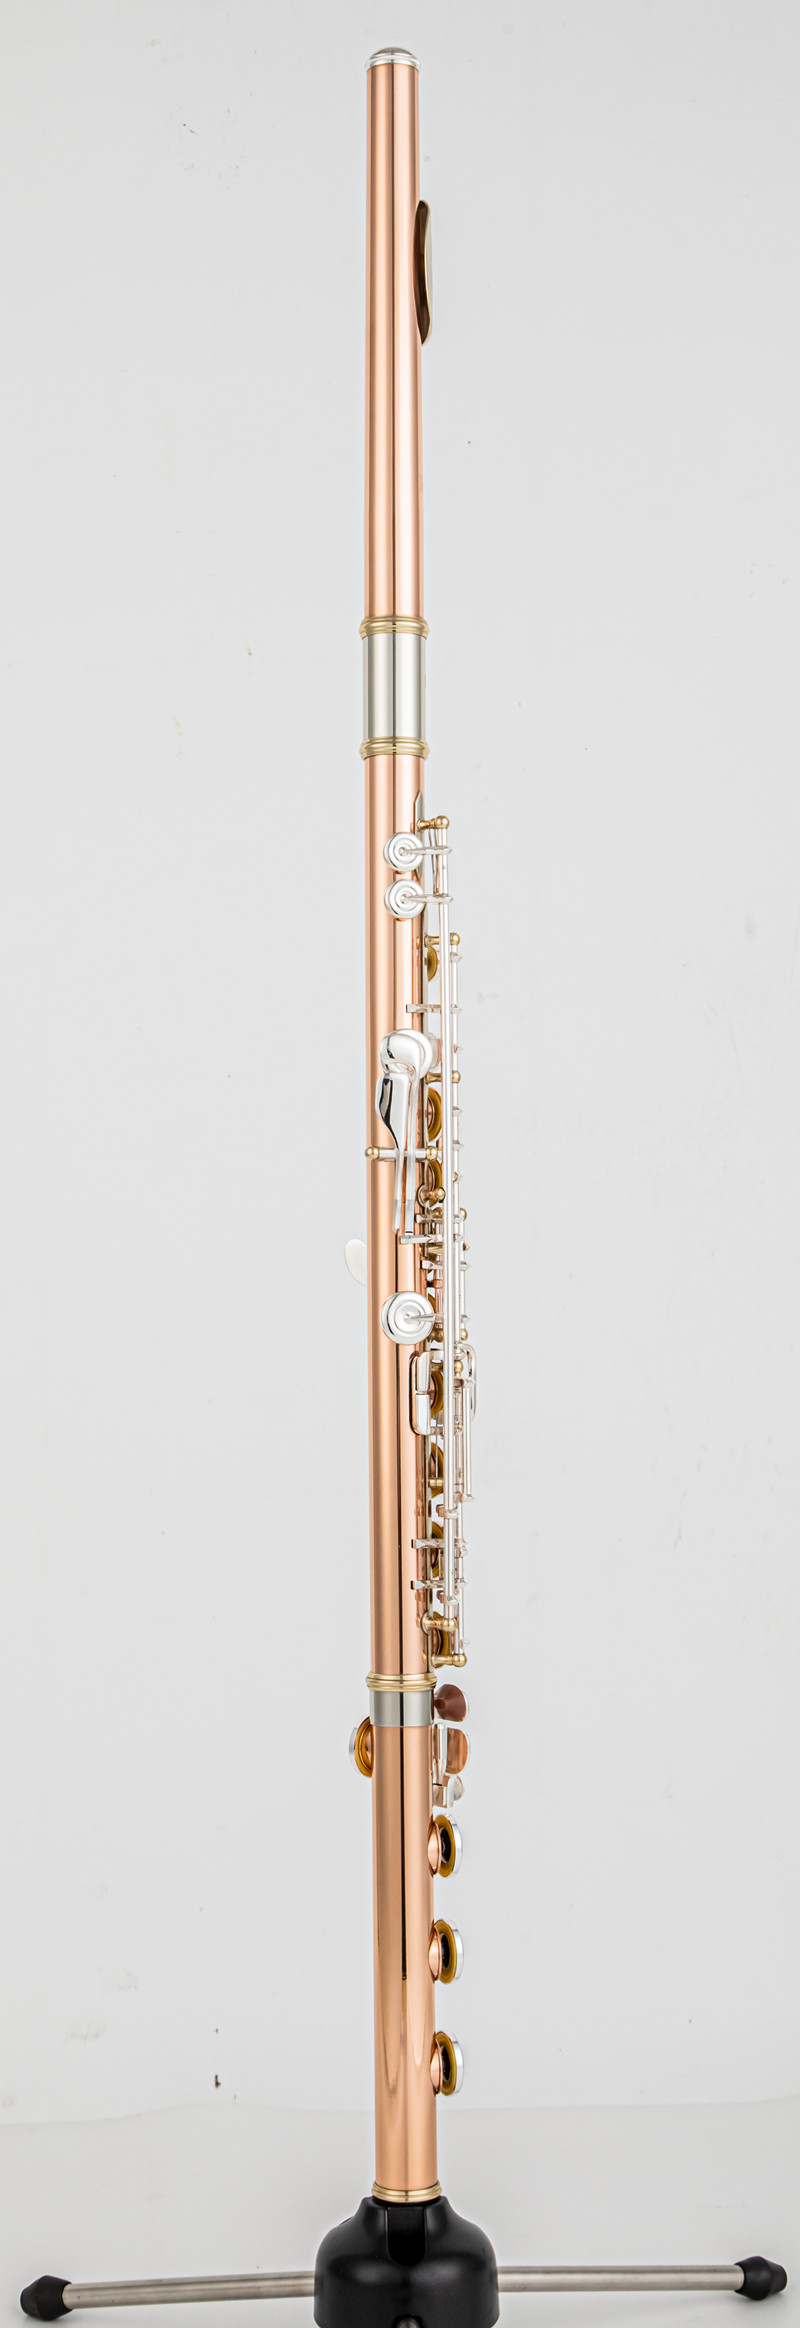 PF-8950ES Flute High Quality Phosphor Bronze 17 Key Flute Open Hole